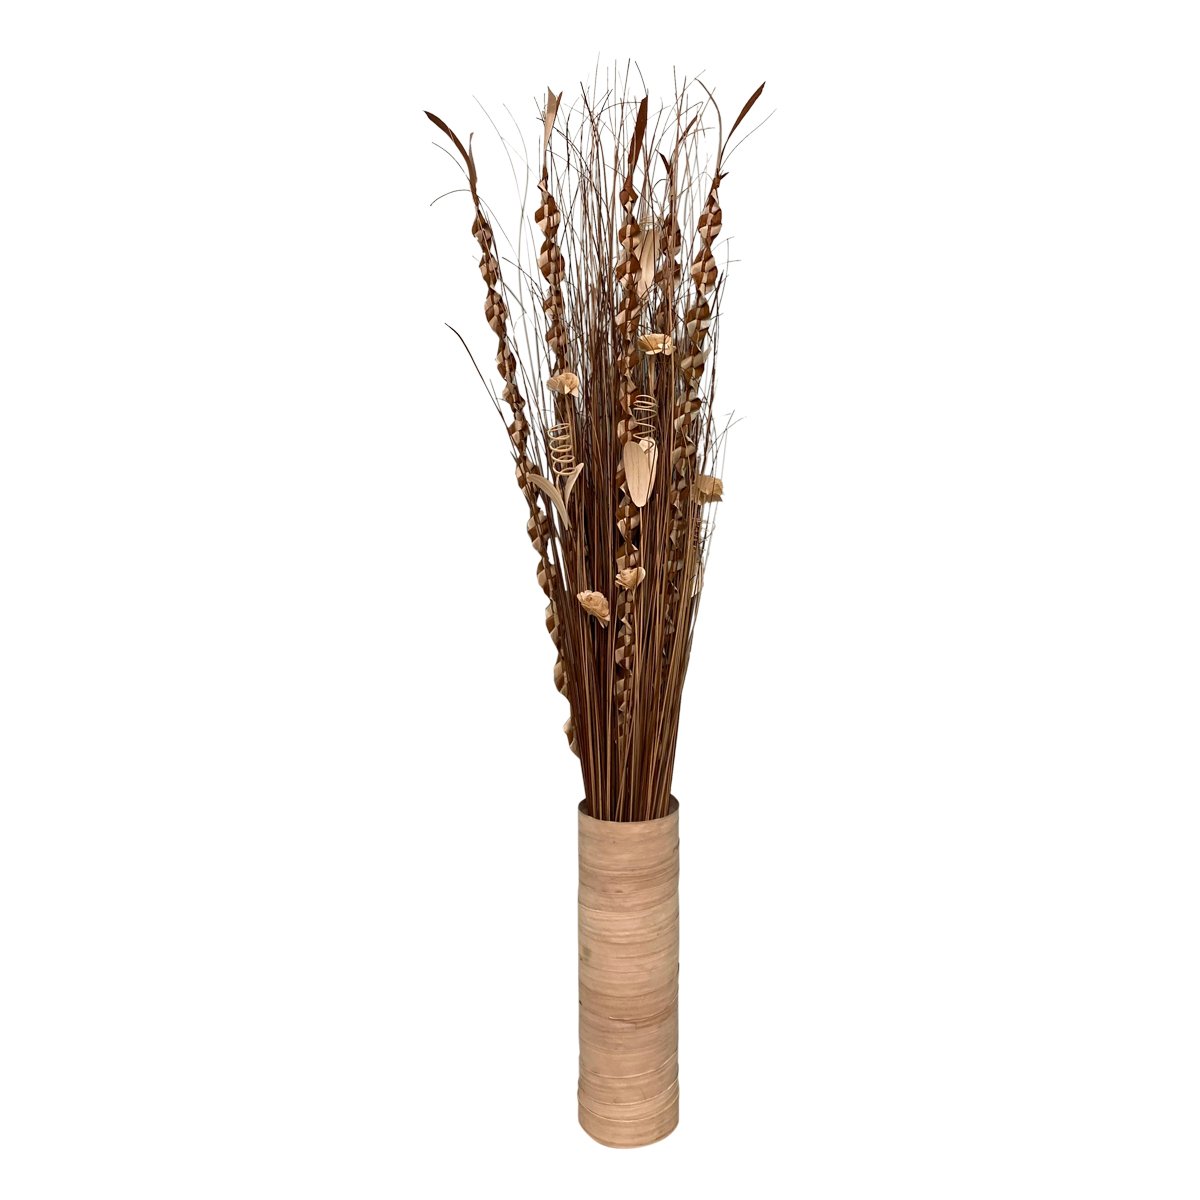 Plaited Dried Palm Leaf Arrangement In A Vase 100cm